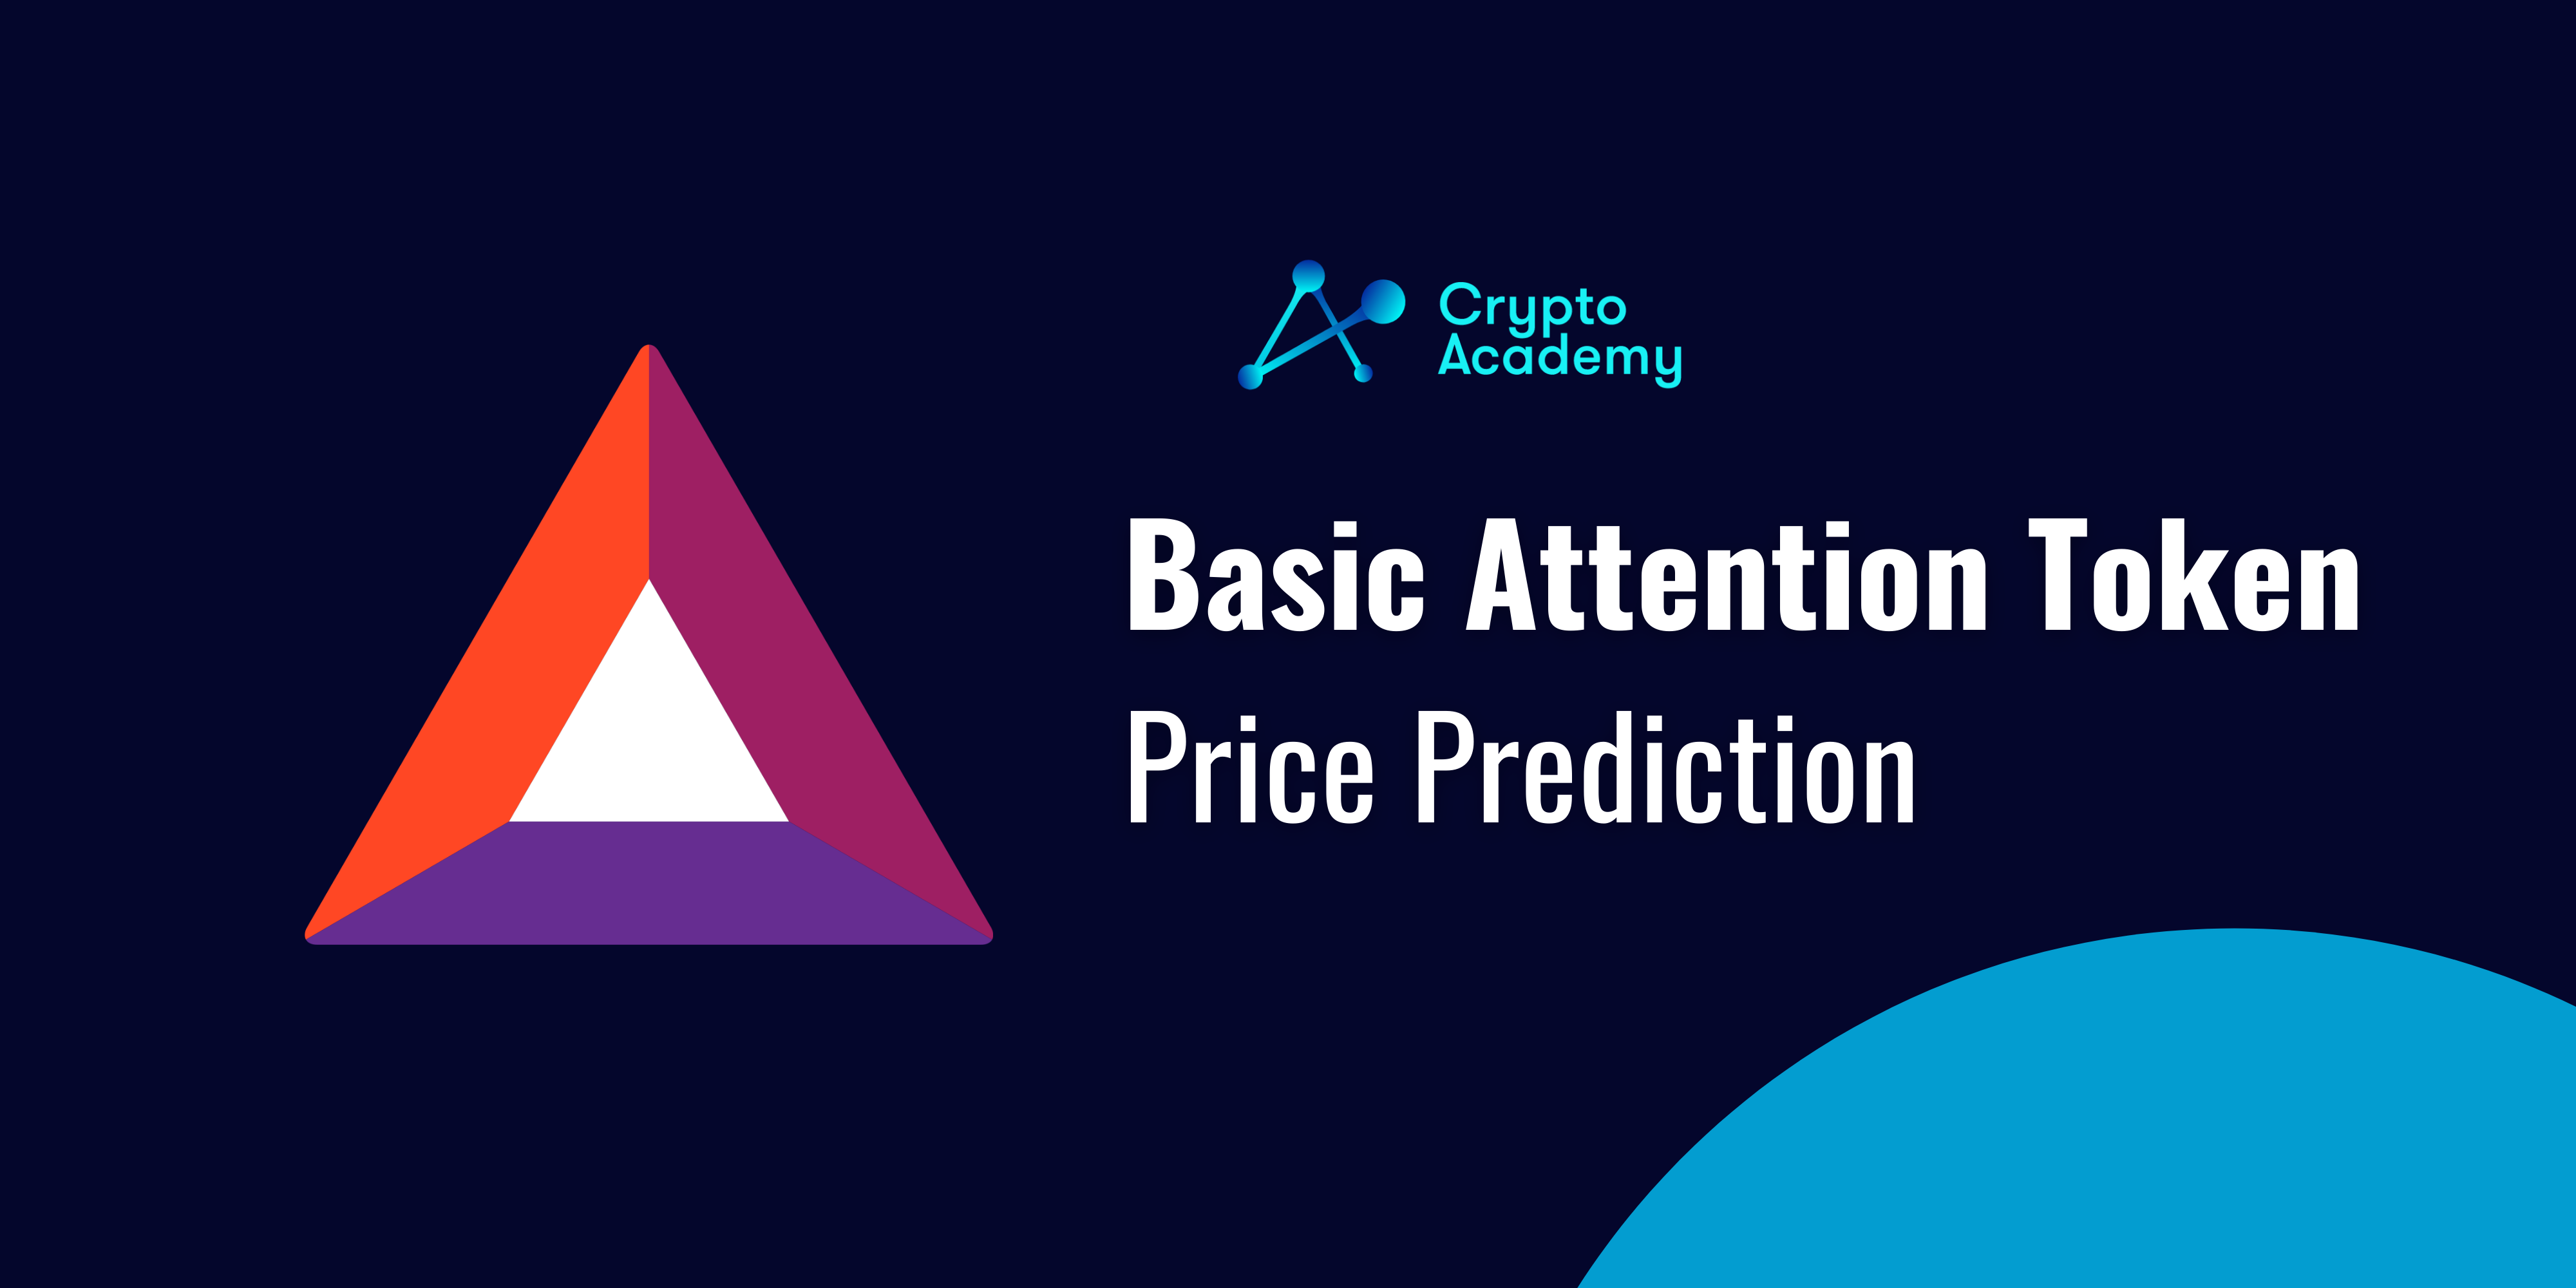 Basic Attention Token Price Prediction 2021, 2022, 2023, 2024, 2025